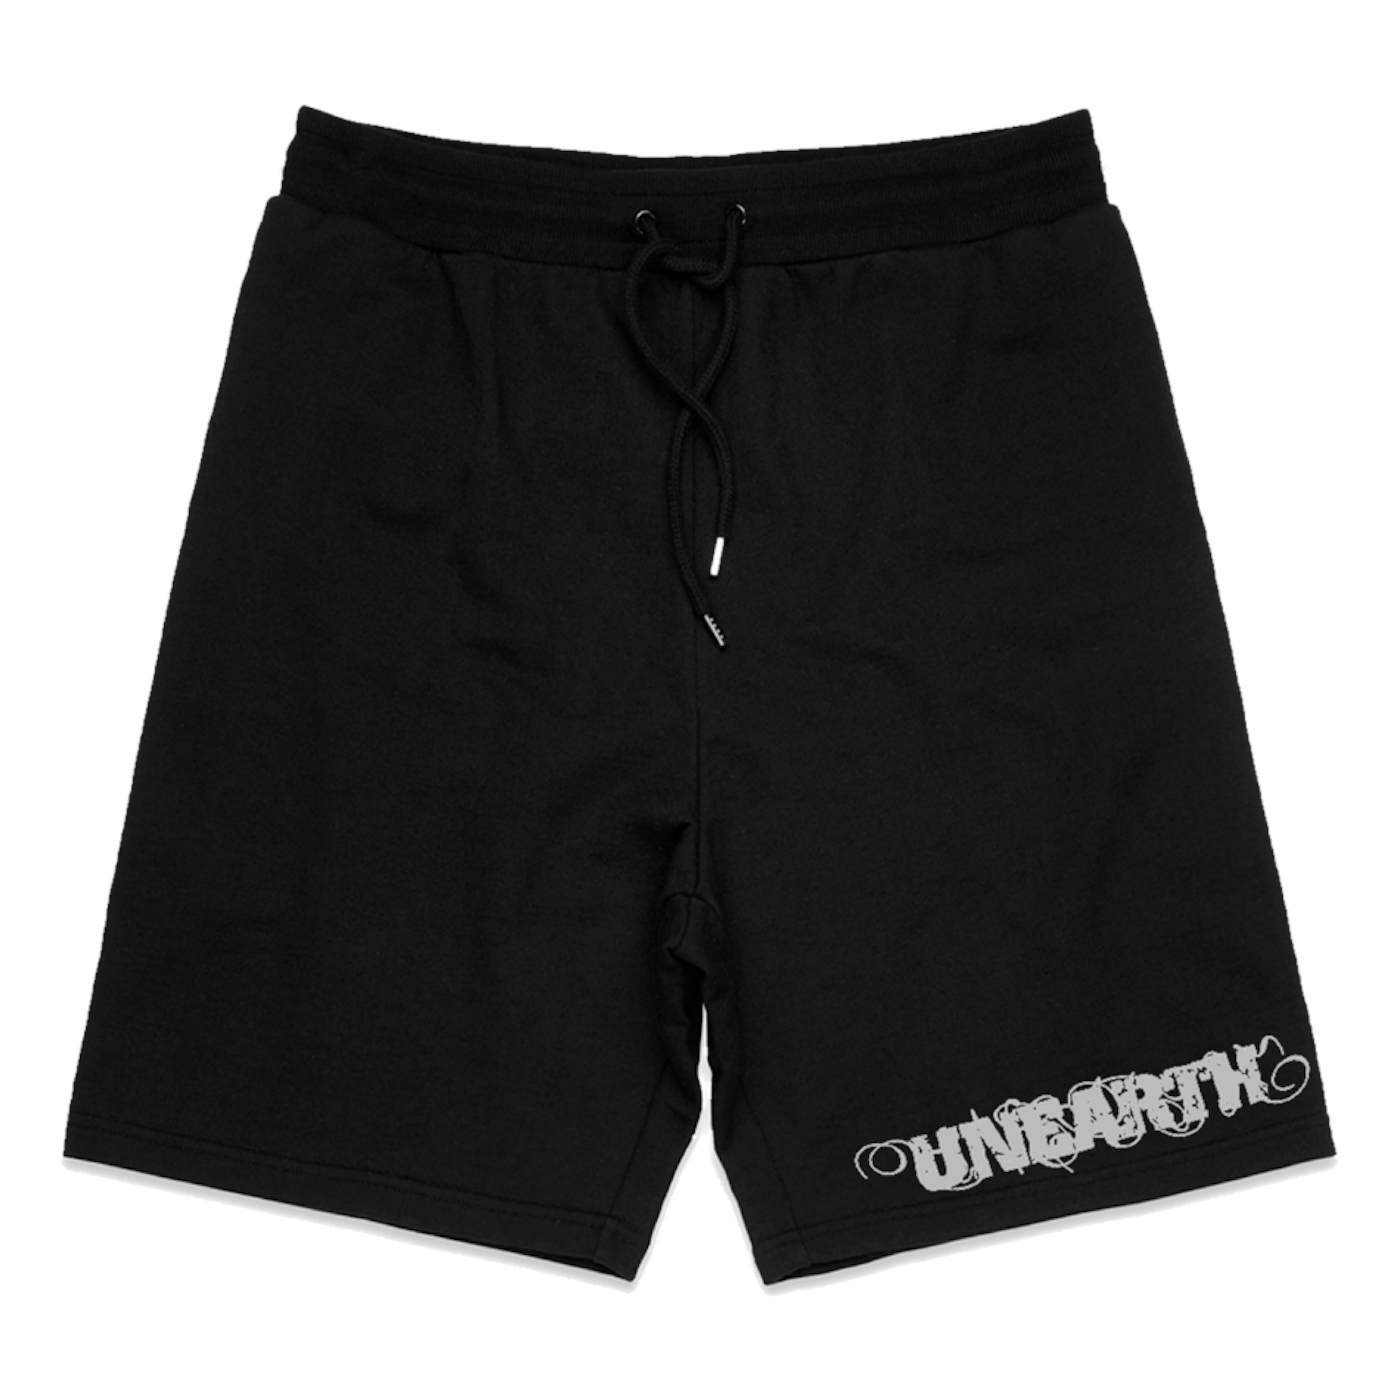 Unearth "Logo" Shorts